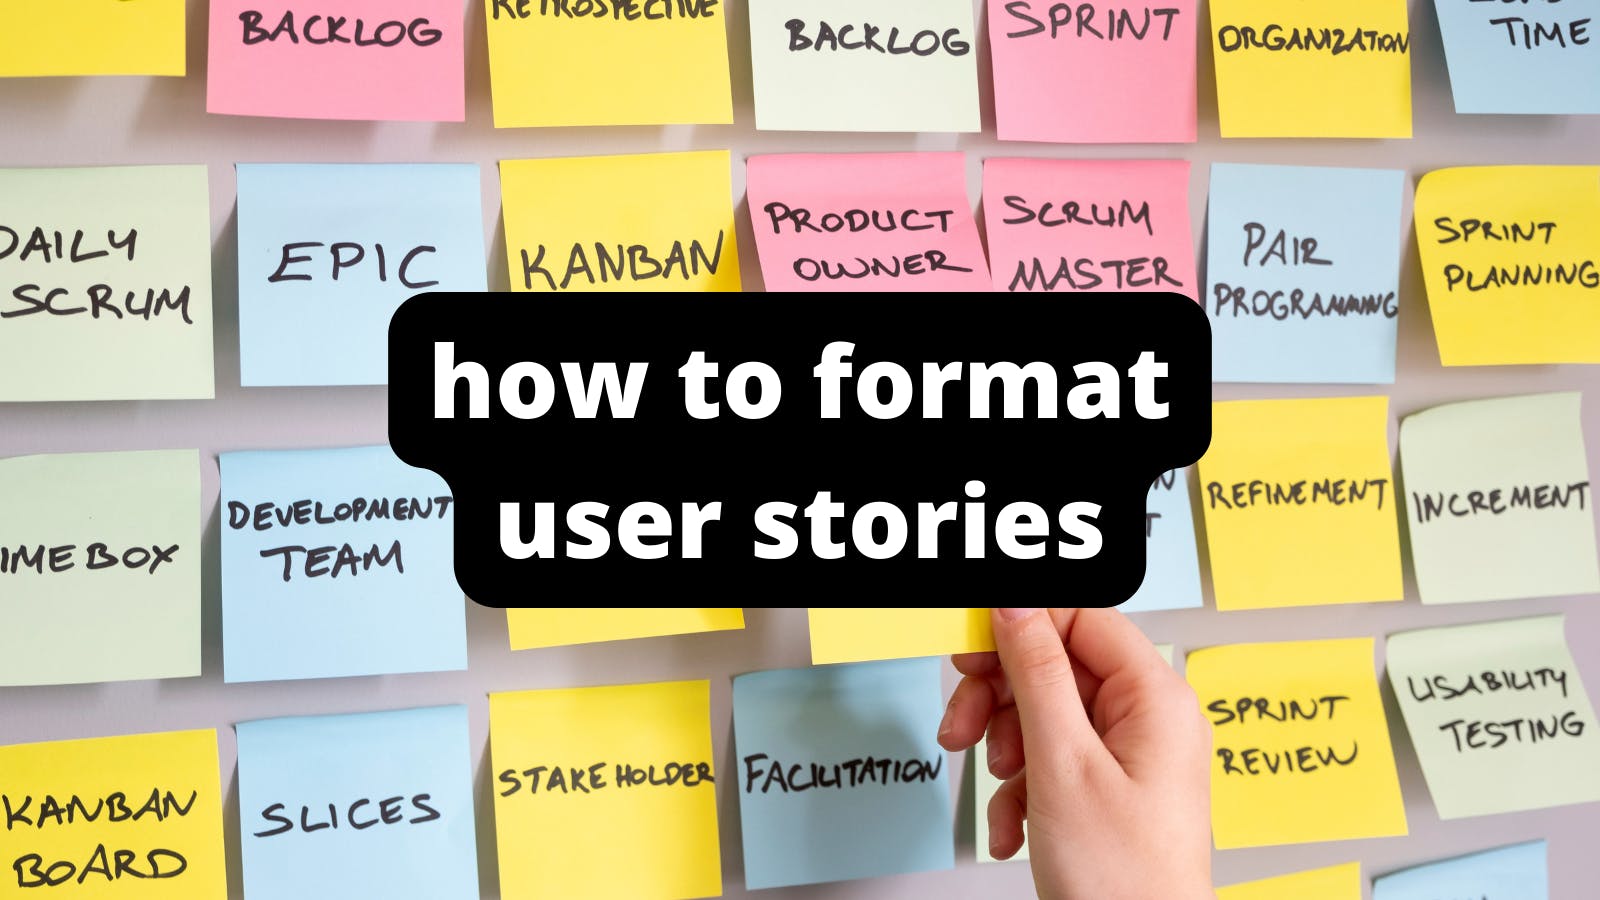 Product Development I: User Story Format